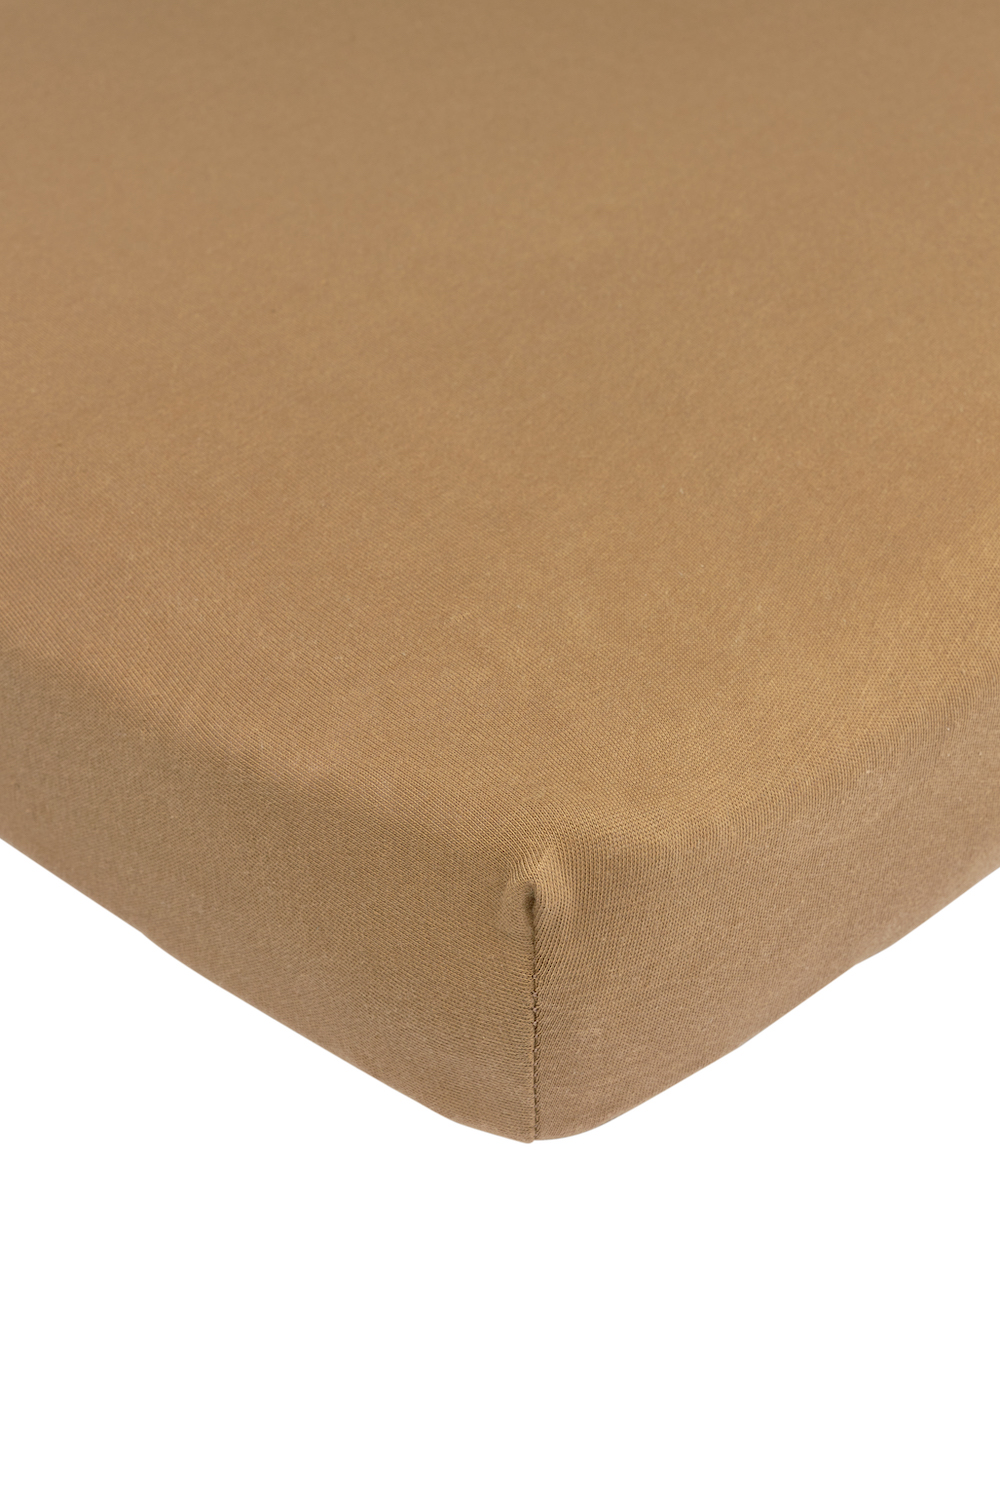 Jersey Fitted Sheet Playpen Mattress - Toffee - 75x95cm